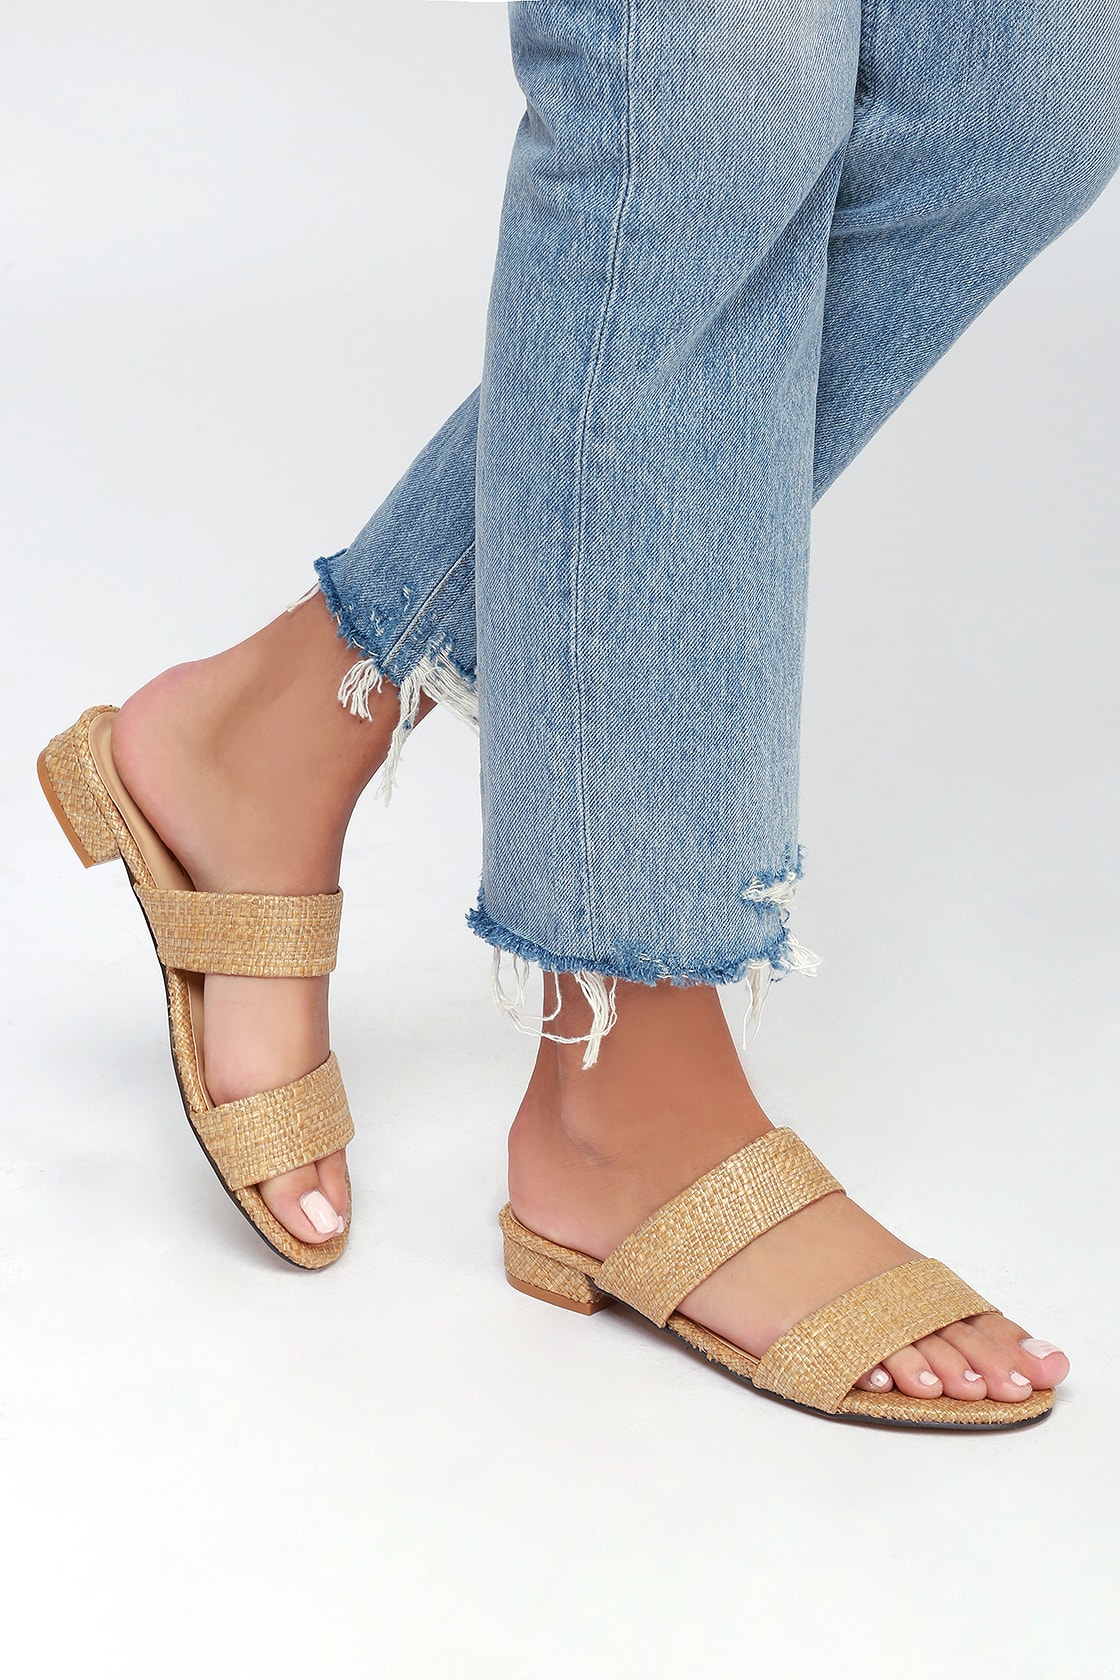 Cute Woven Sandals - Natural Sandals - Slide Sandals - Lulus